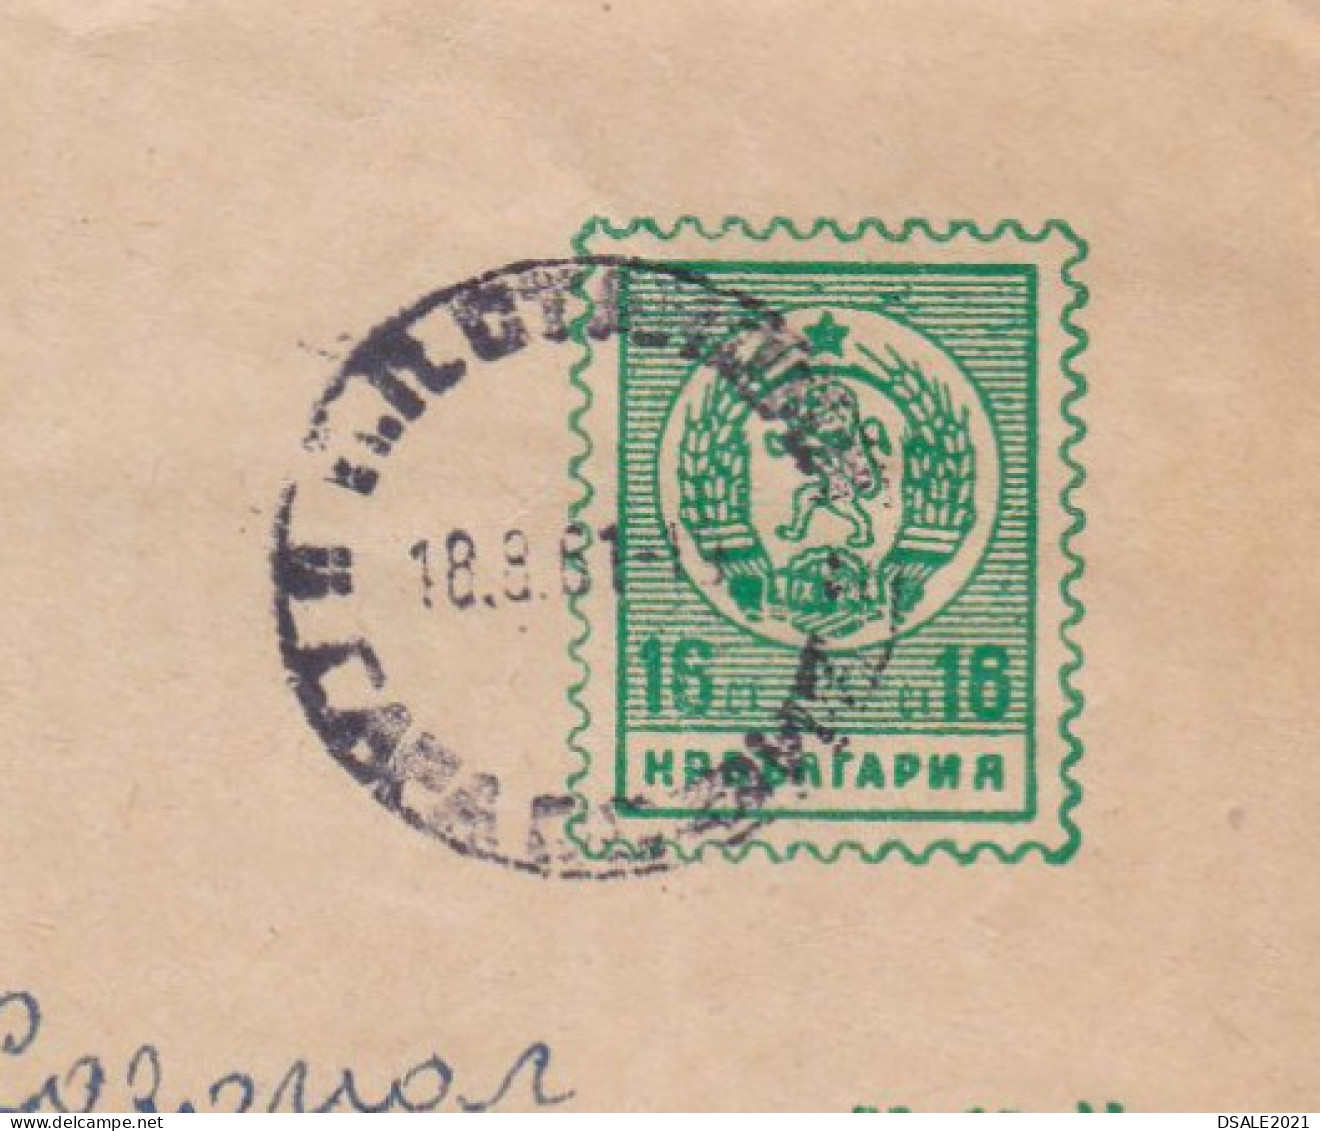 Bulgaria Bulgarie 1960s Postal Stationery Cover - 16St. (PLANT), Entier, Sent SOFIA Railway Station Post Office (68207) - Sobres